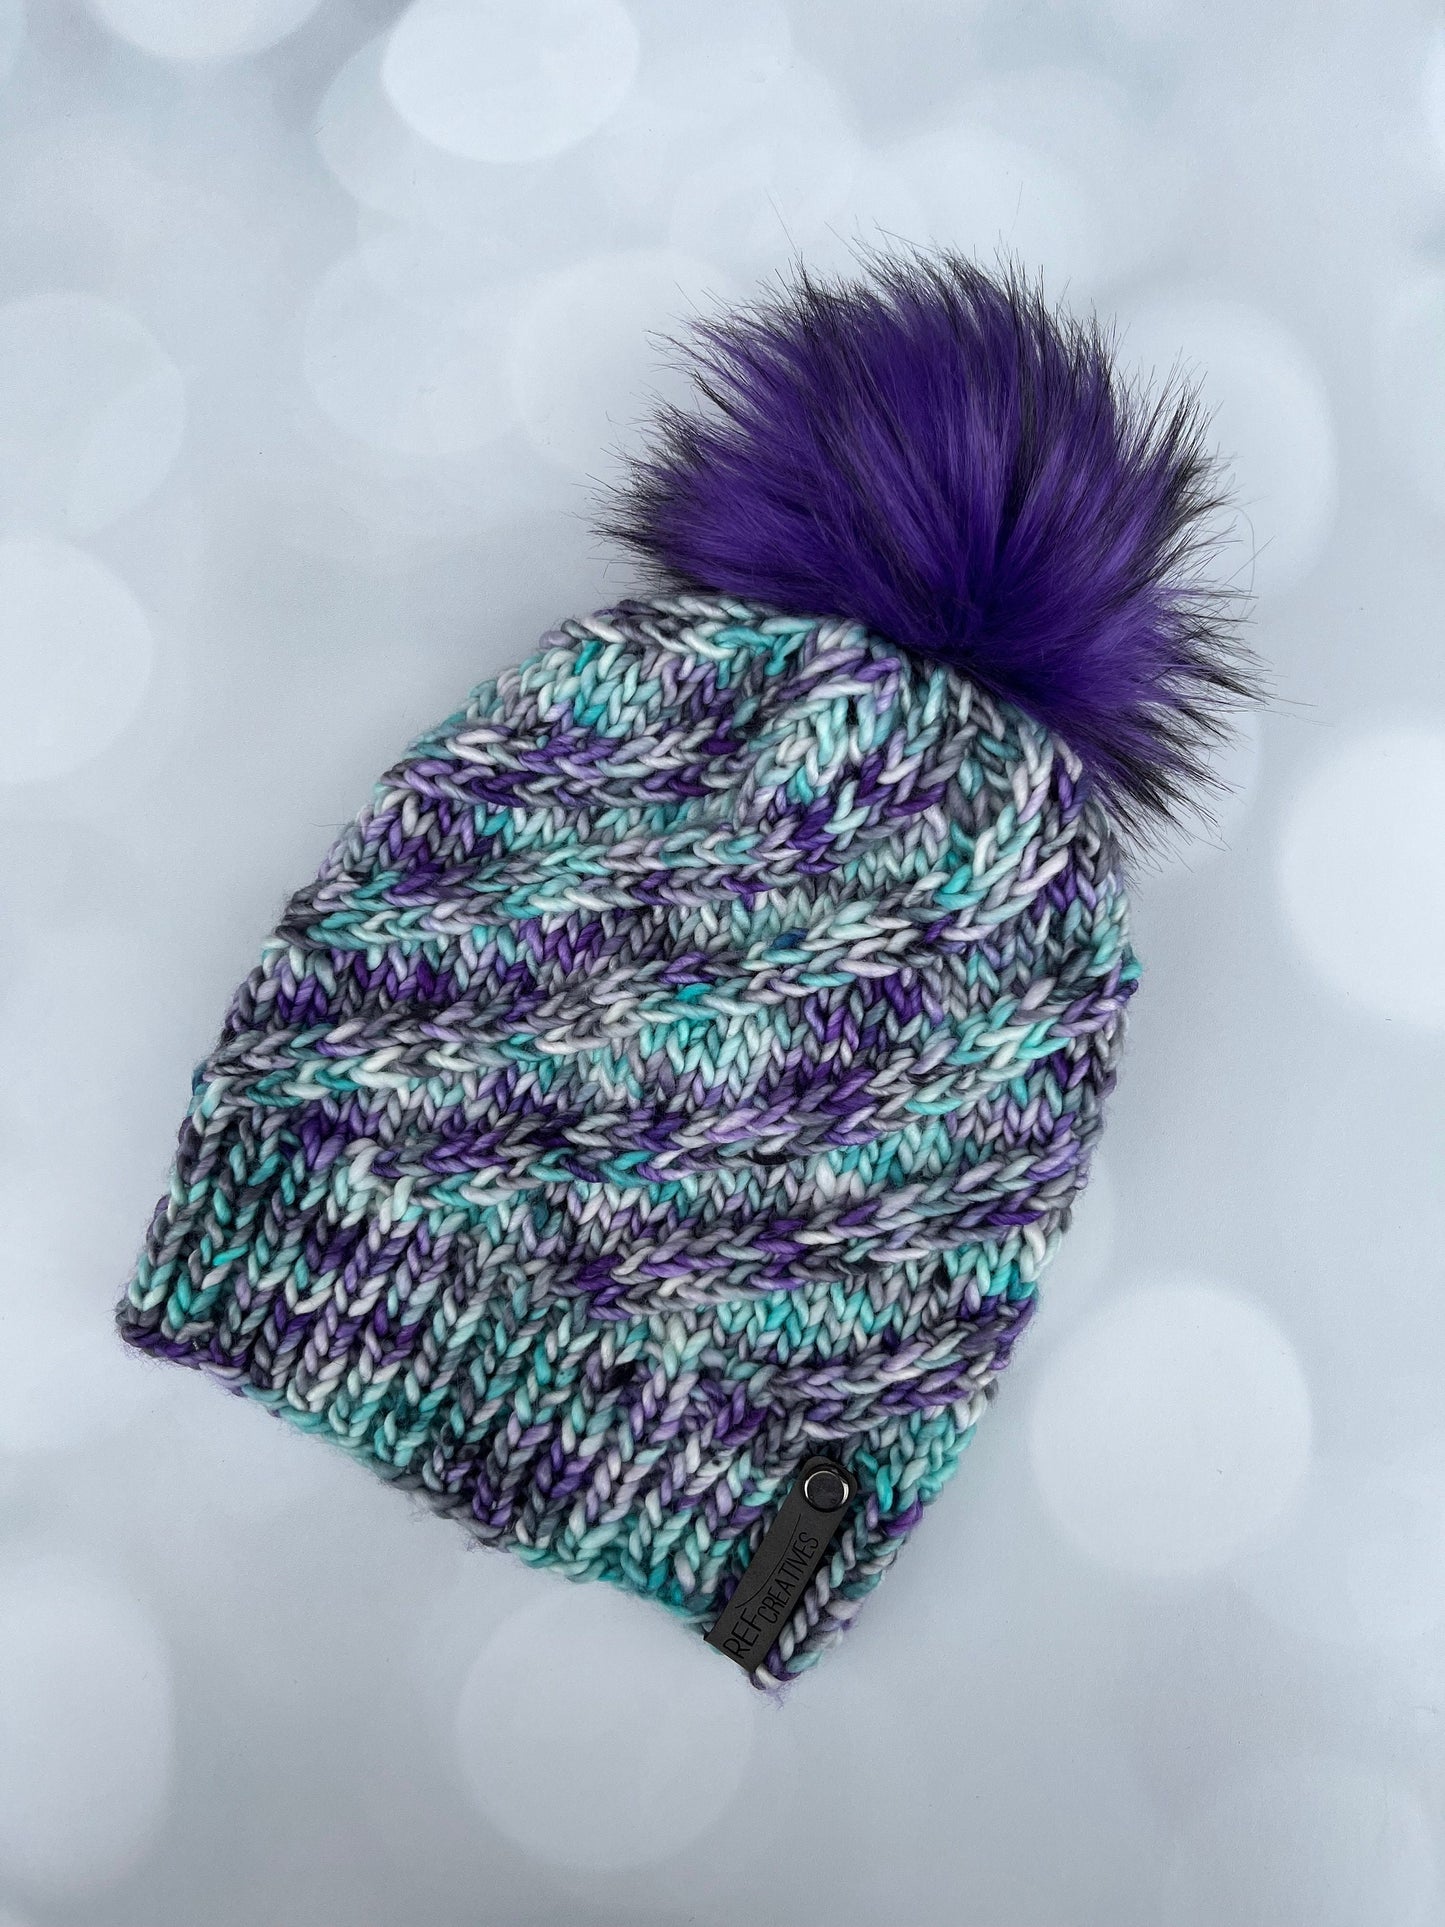 Ski Bum Swirls Hand Knit Hat with Hand Dyed Yarn